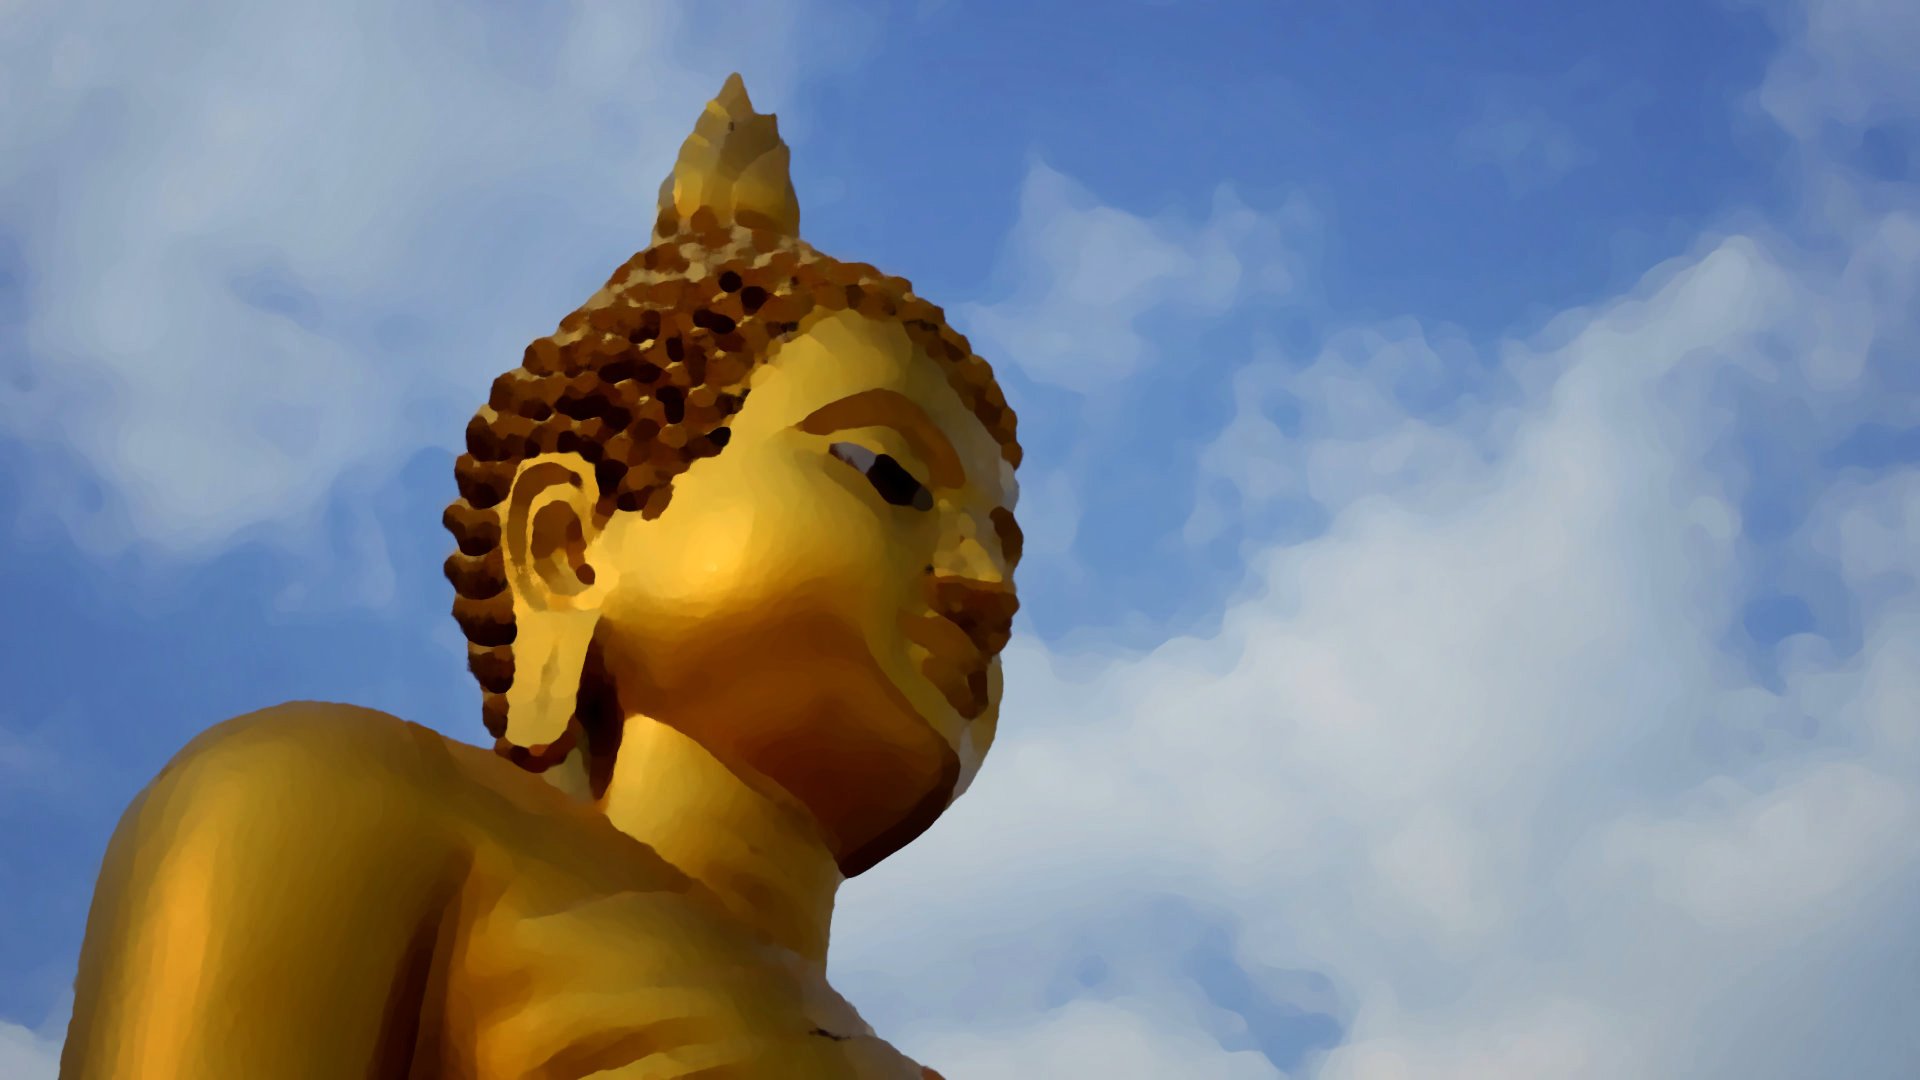 The Buddha and the sky 3